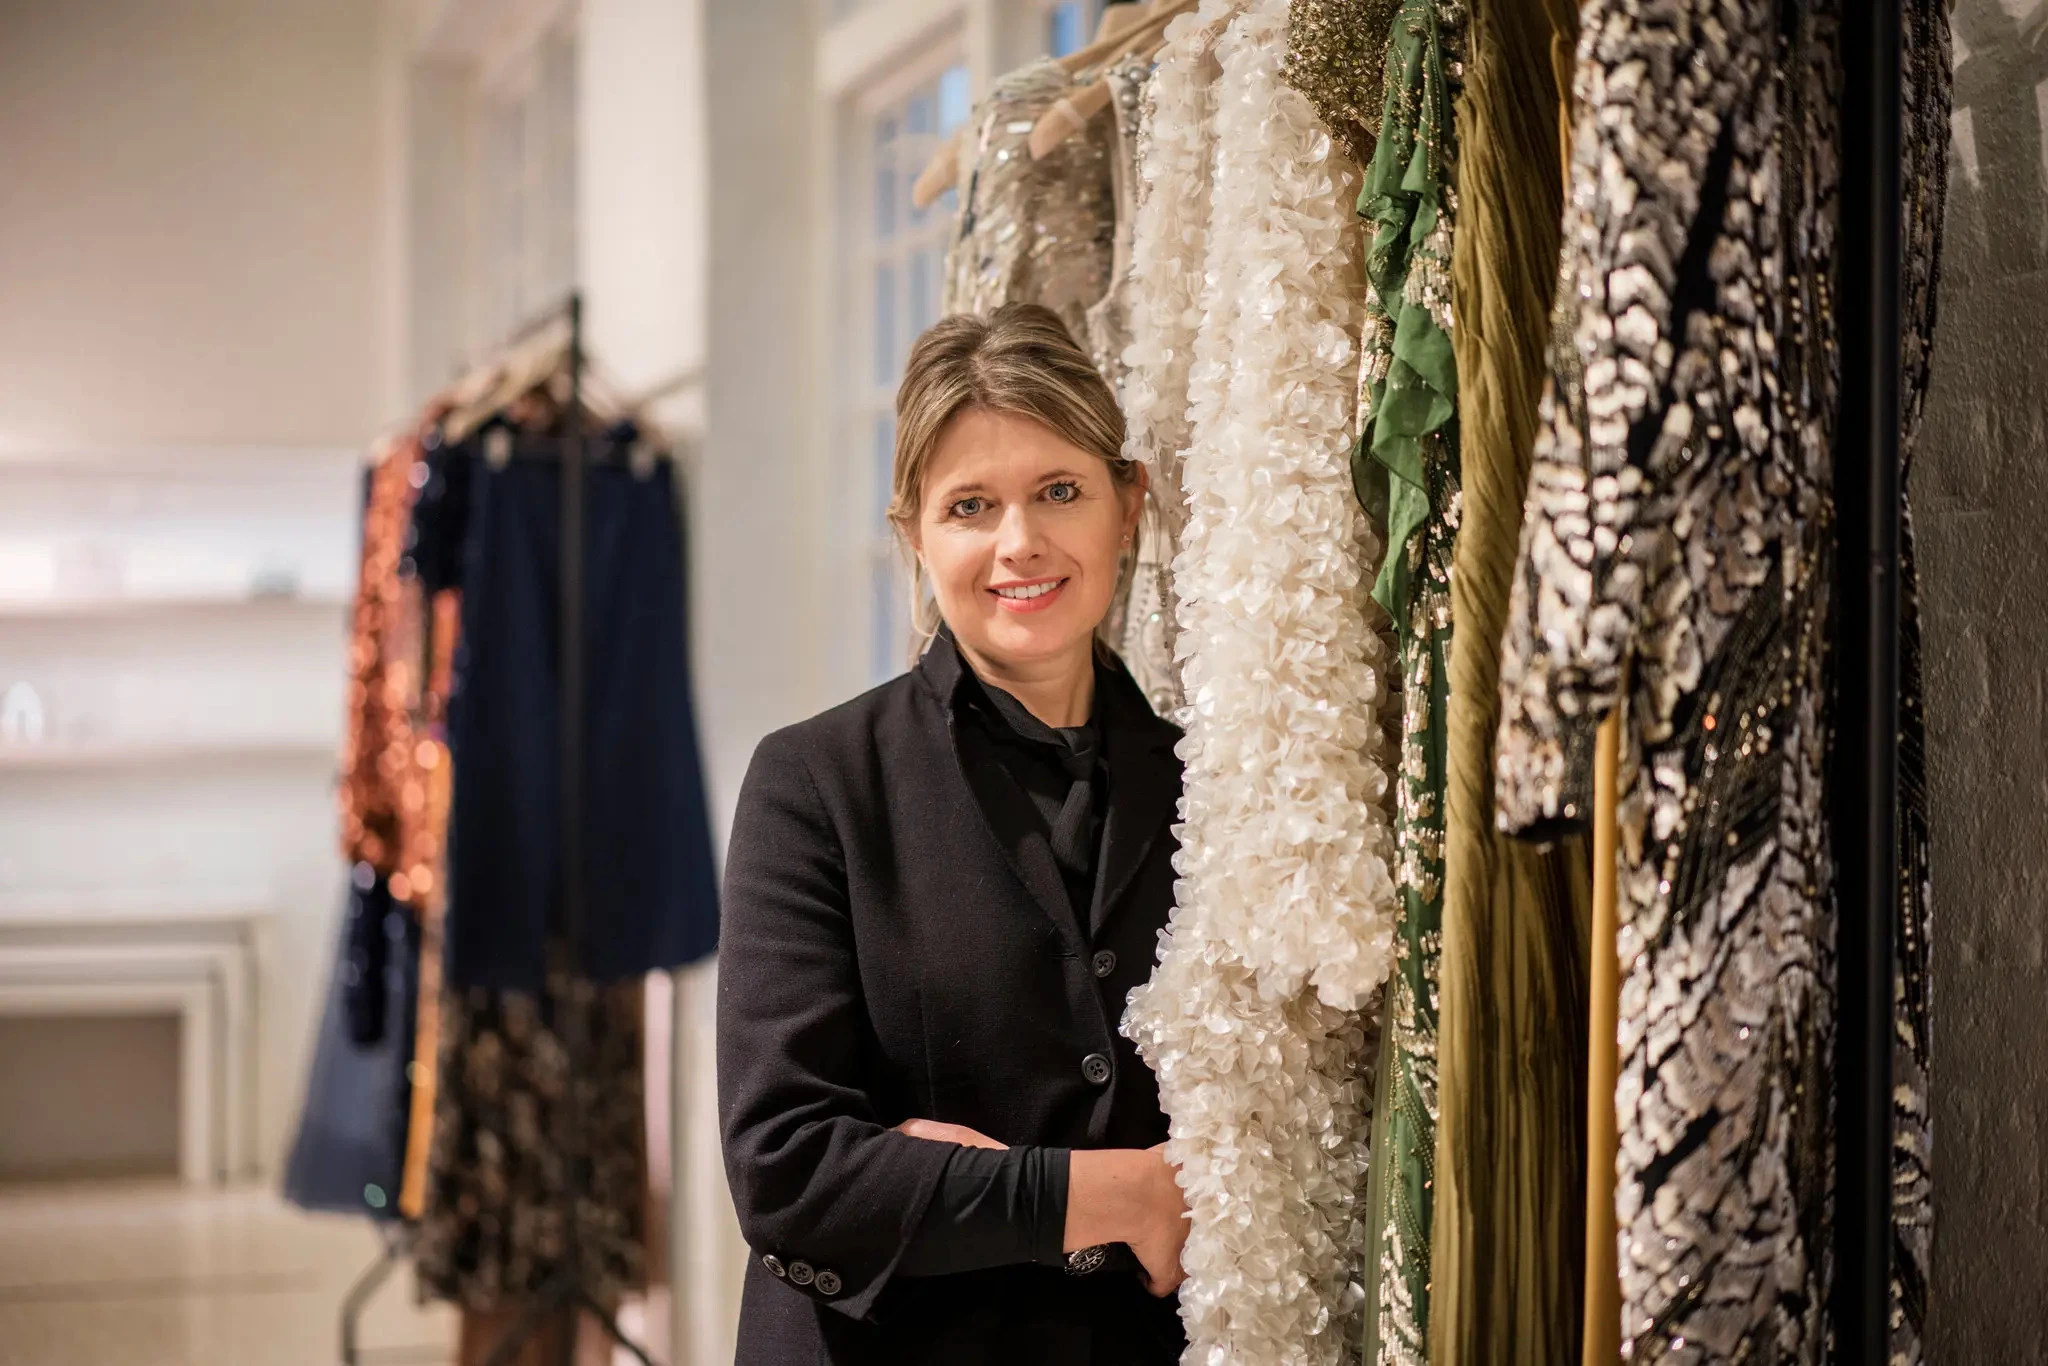 Jenny Packham, designer and founder of Jenny Packham, smiling at the camera, stood next to a rack of Janny Packham dresses.